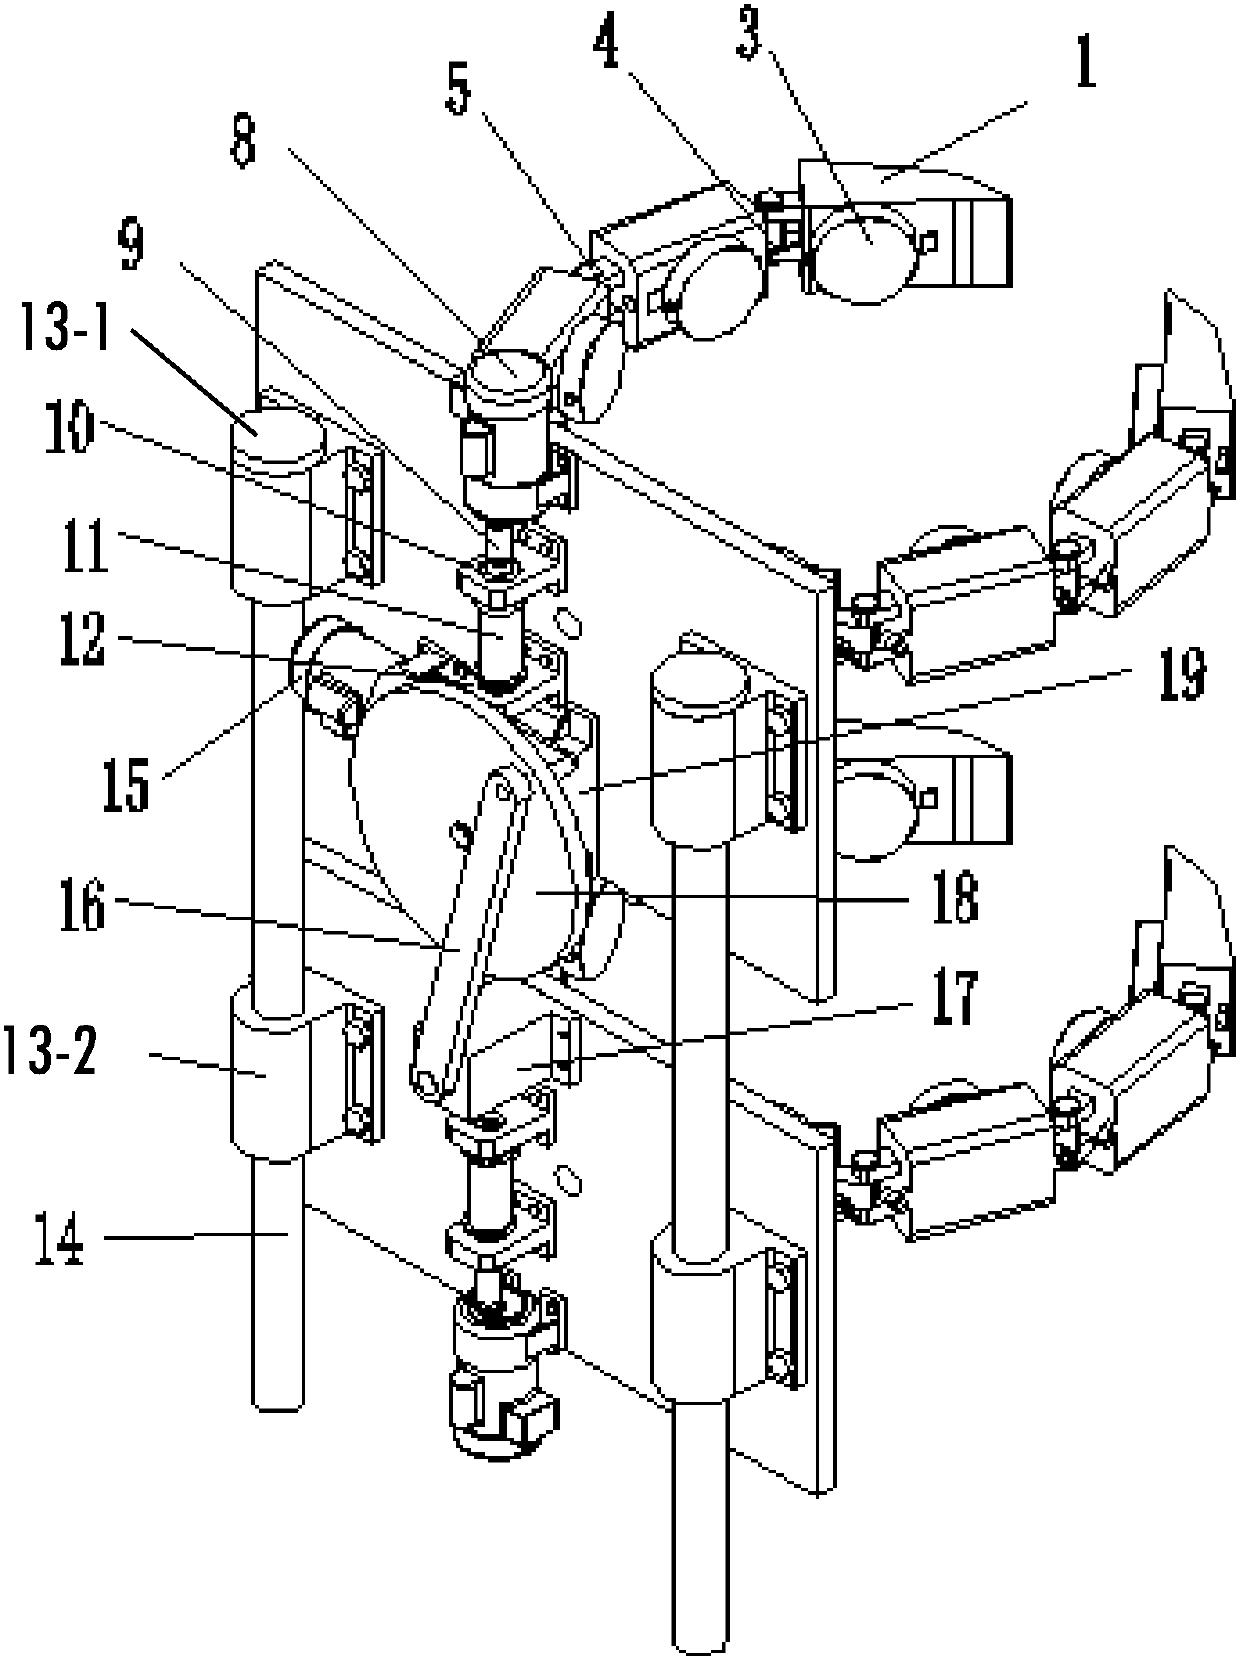 Inspection Robot Mechanism of Hugging Mine Hoist Based on Electromagnetic Chuck